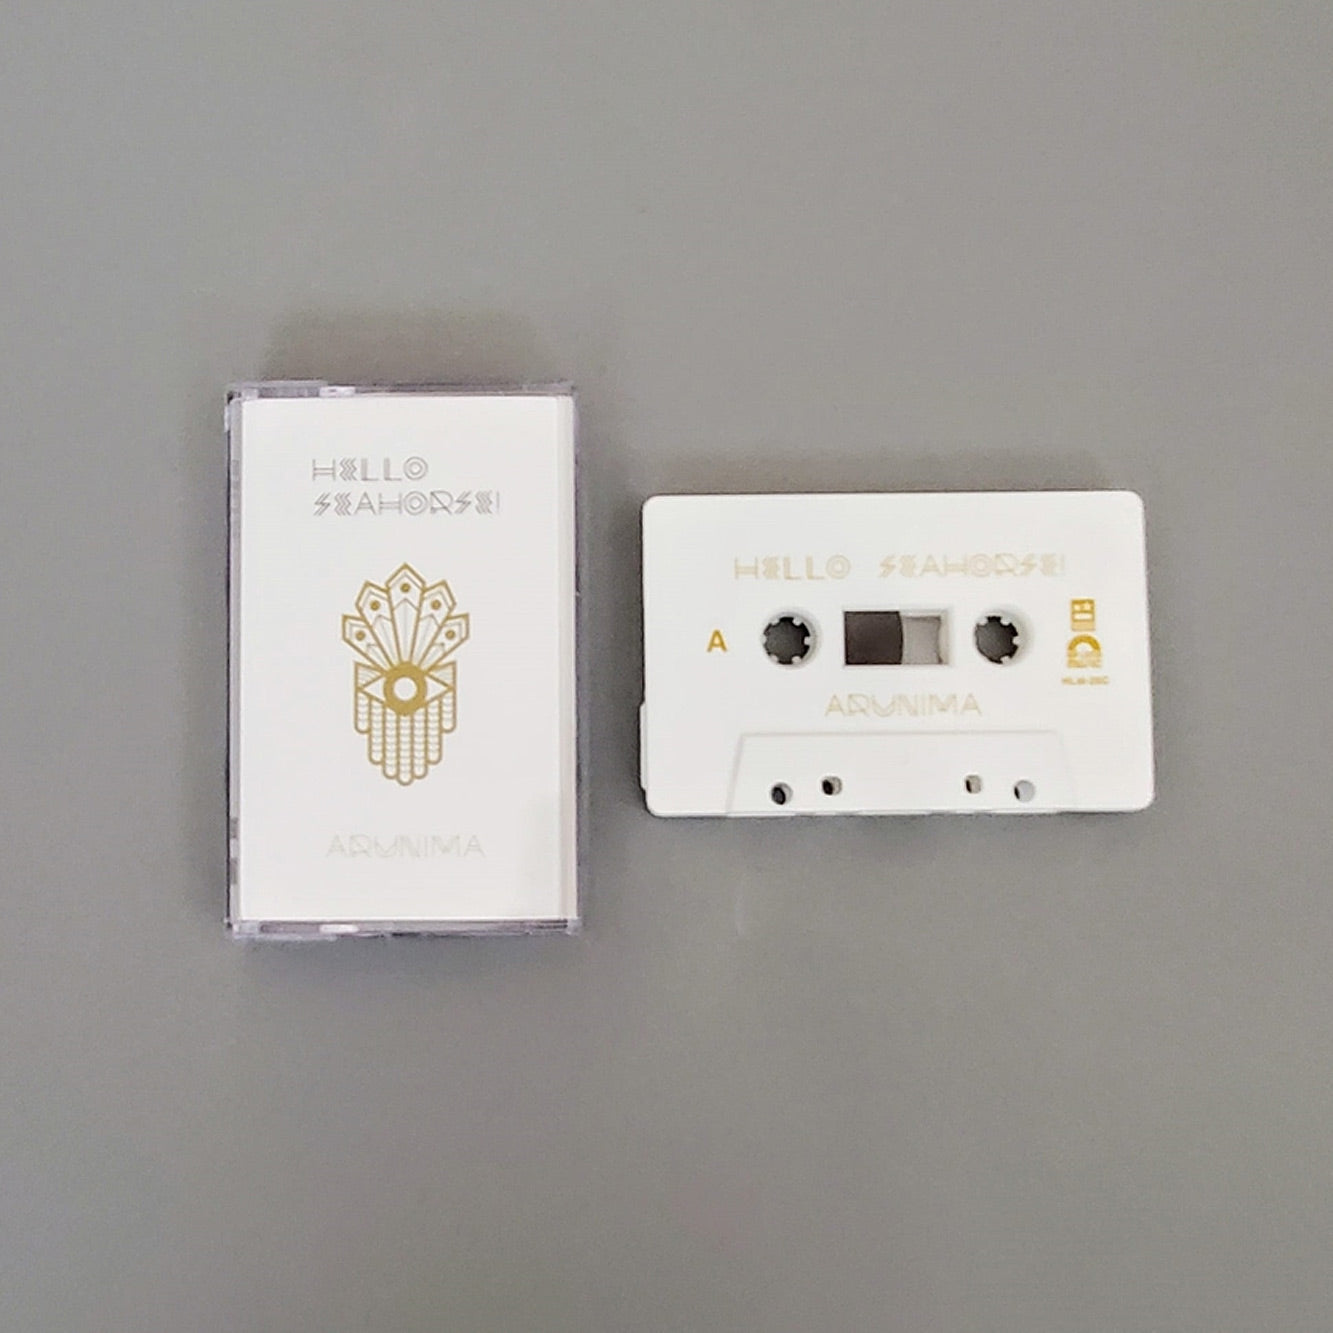 Hello Seahorse! - Arunima (cassette) - Limited Edition!!!